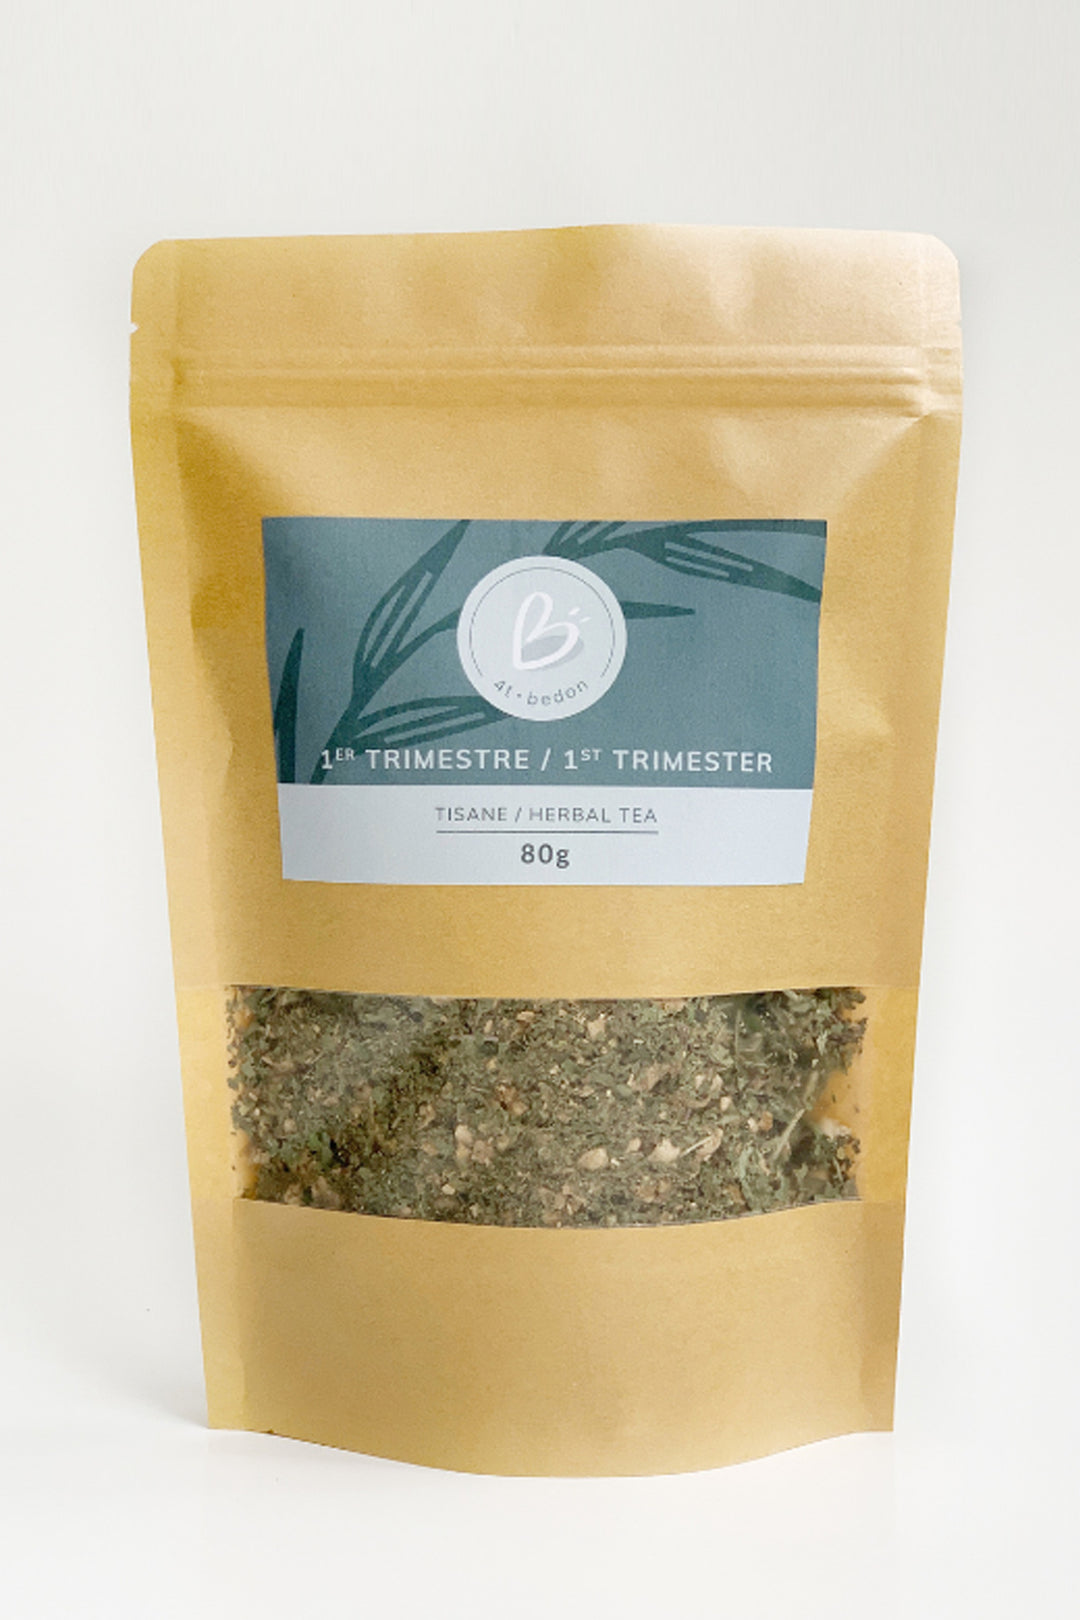 1st TRIMESTER herbal tea – For nausea